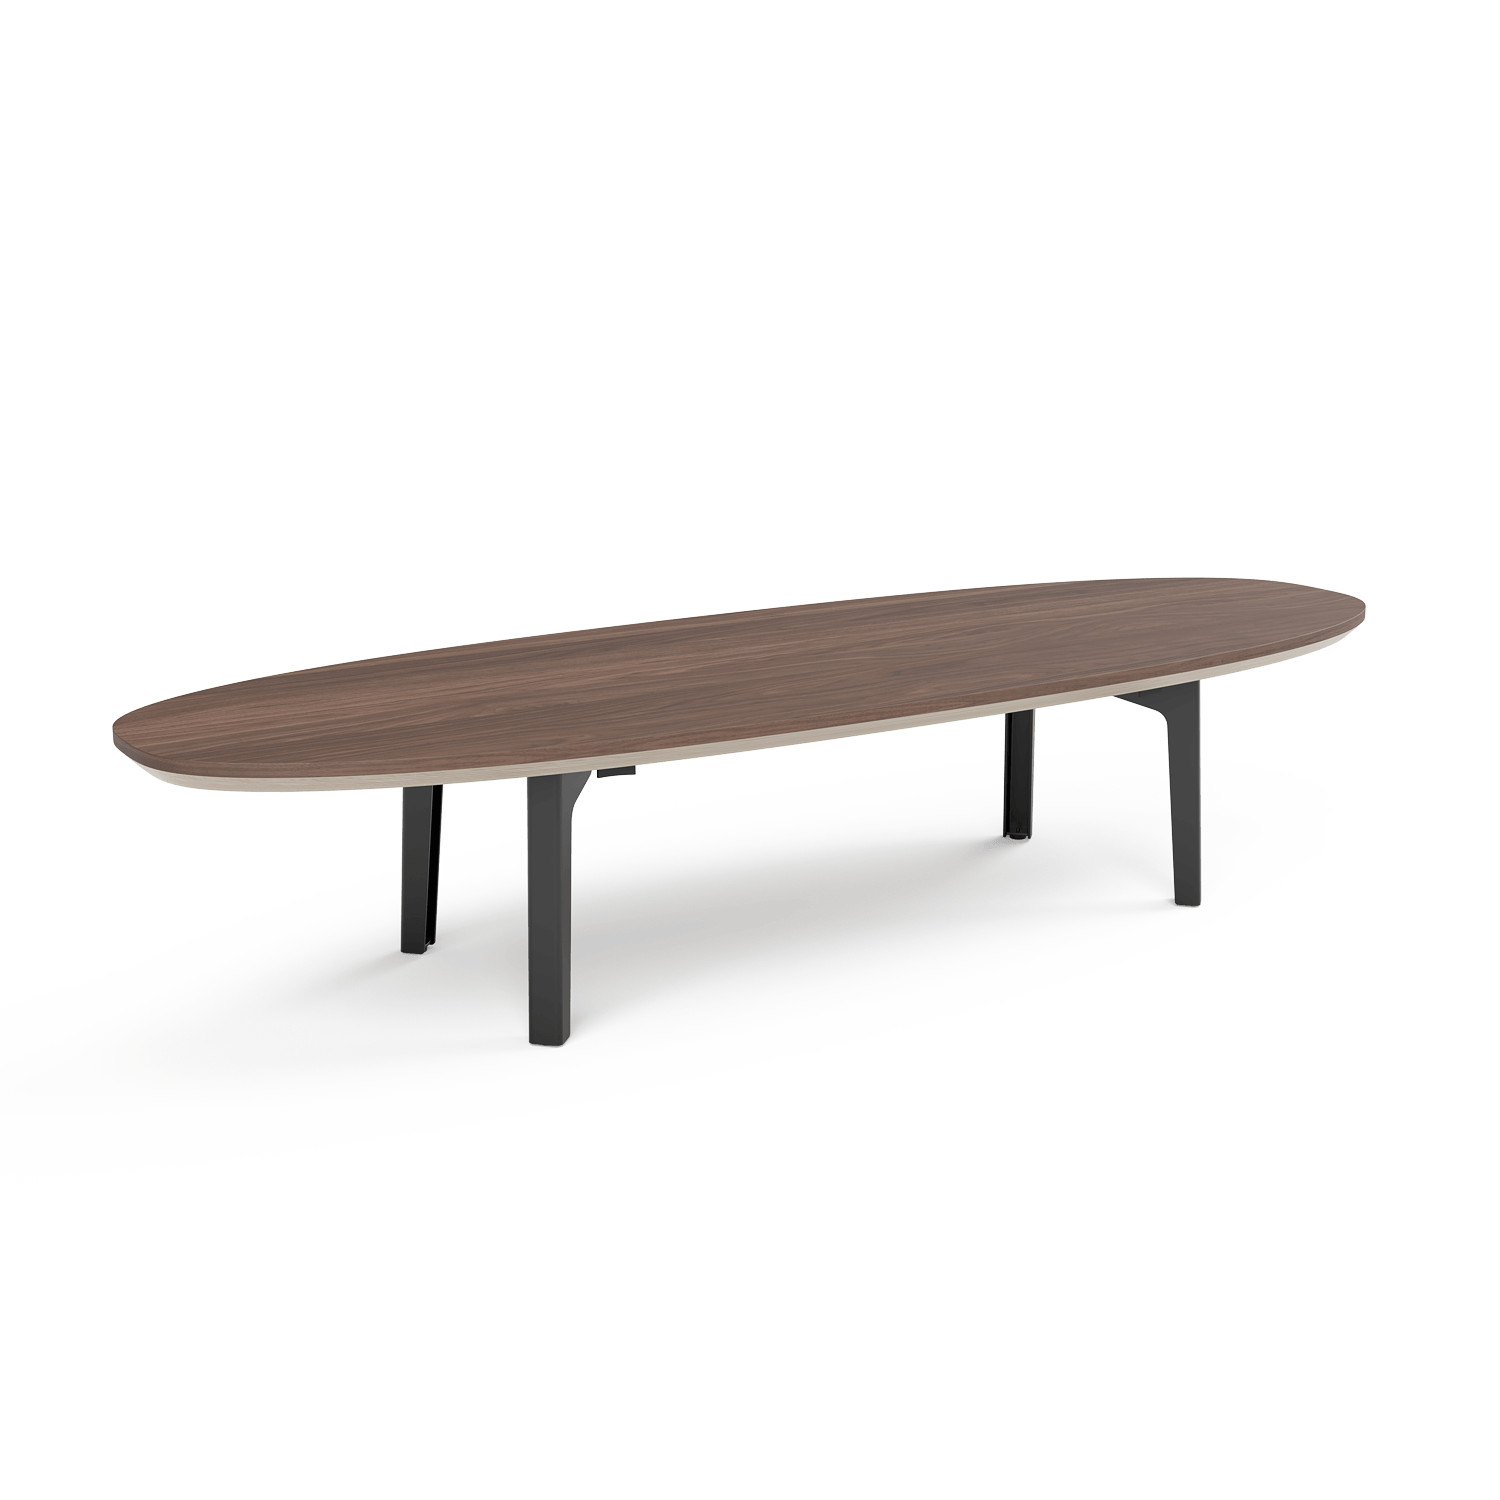 The Floyd Coffee Table